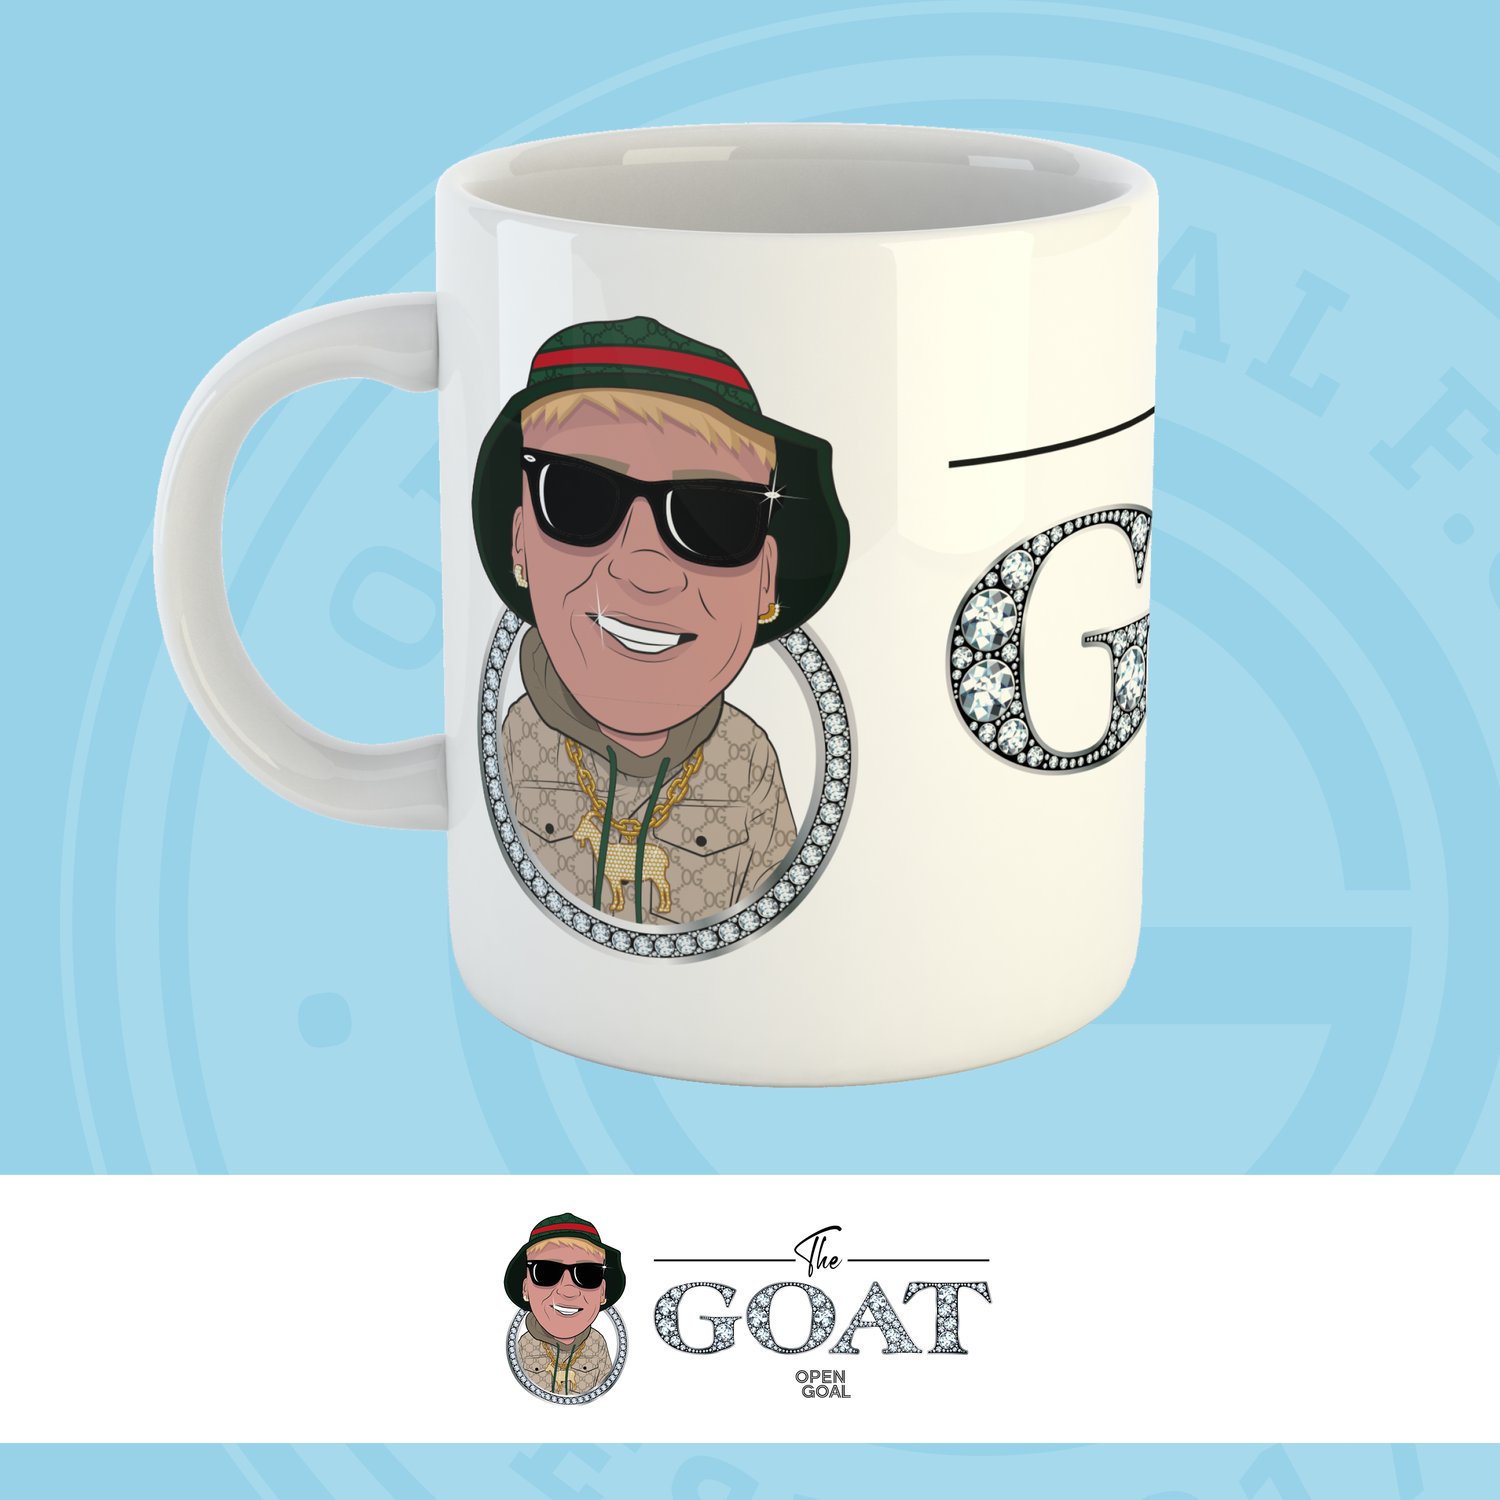 Image of The GOAT - Open Goal Mug